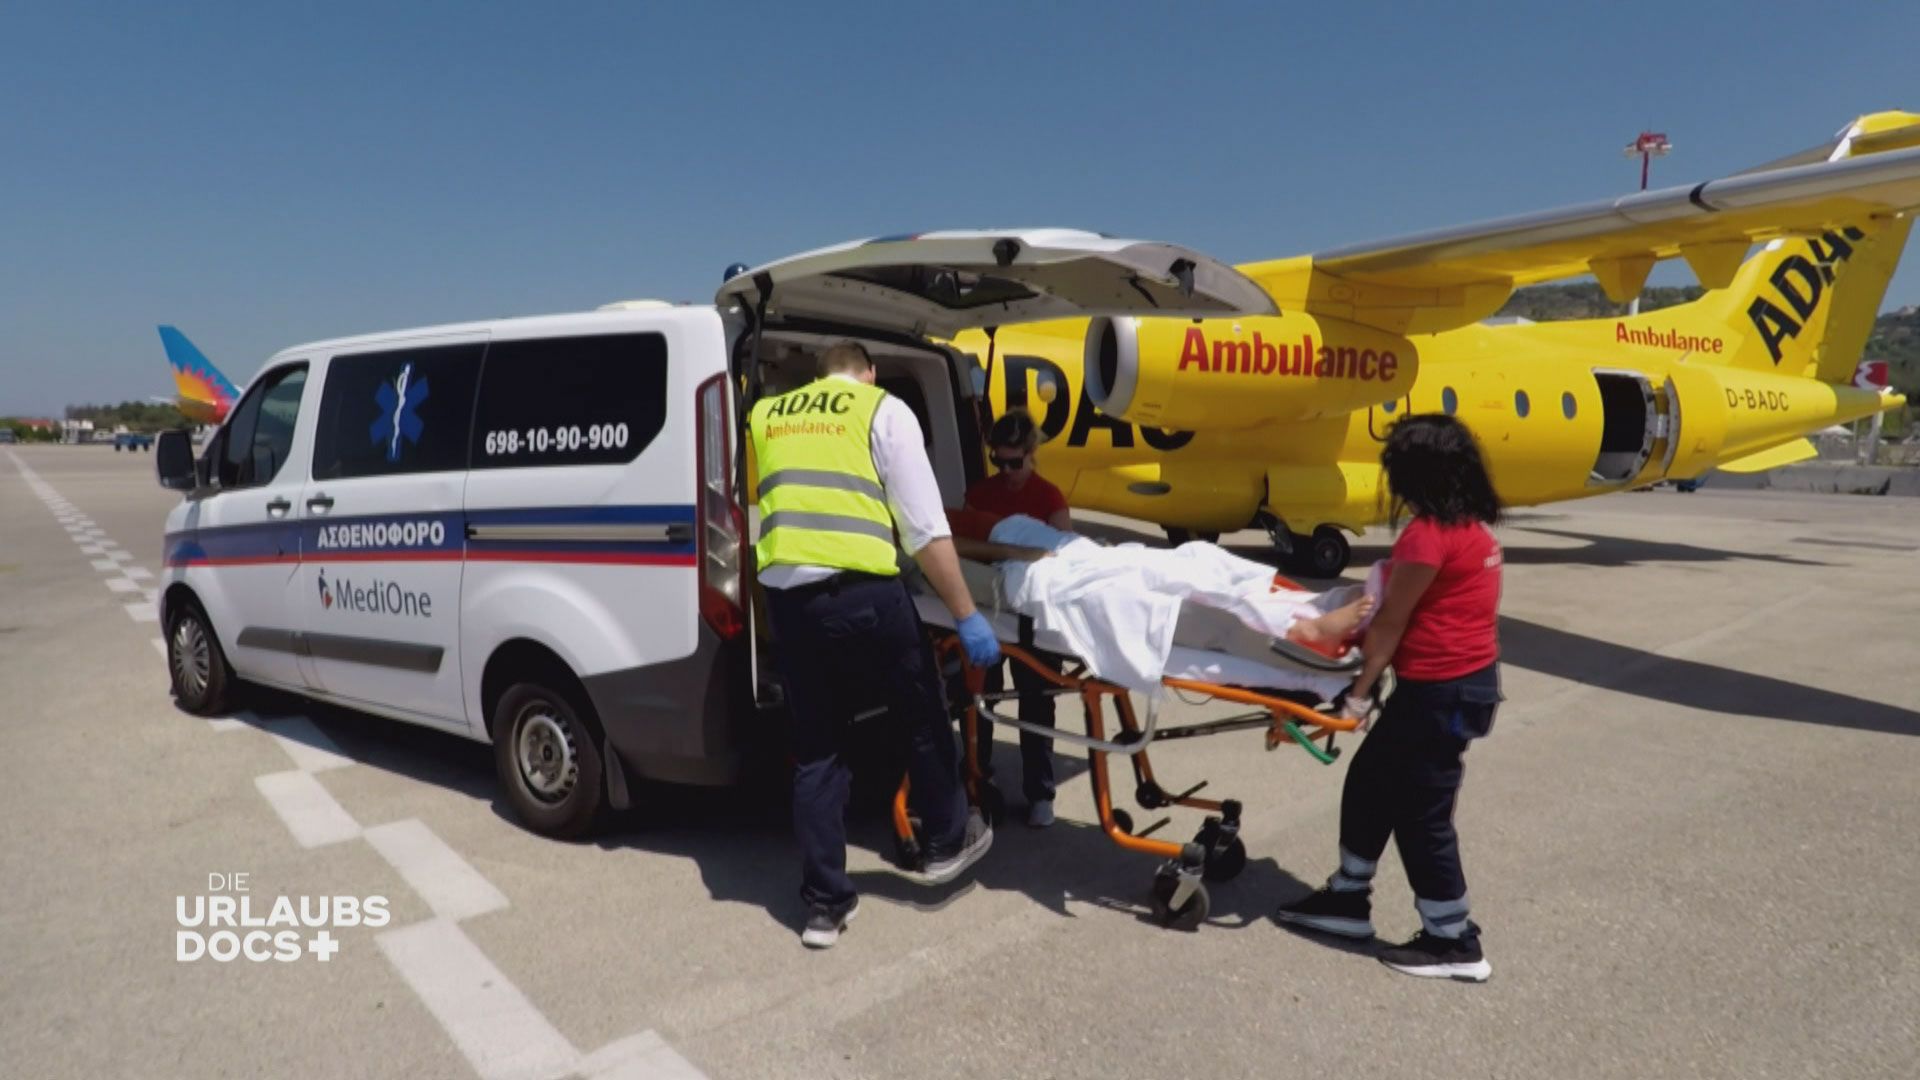 ADAC Ambulanz Service: Notfall in Griechenland